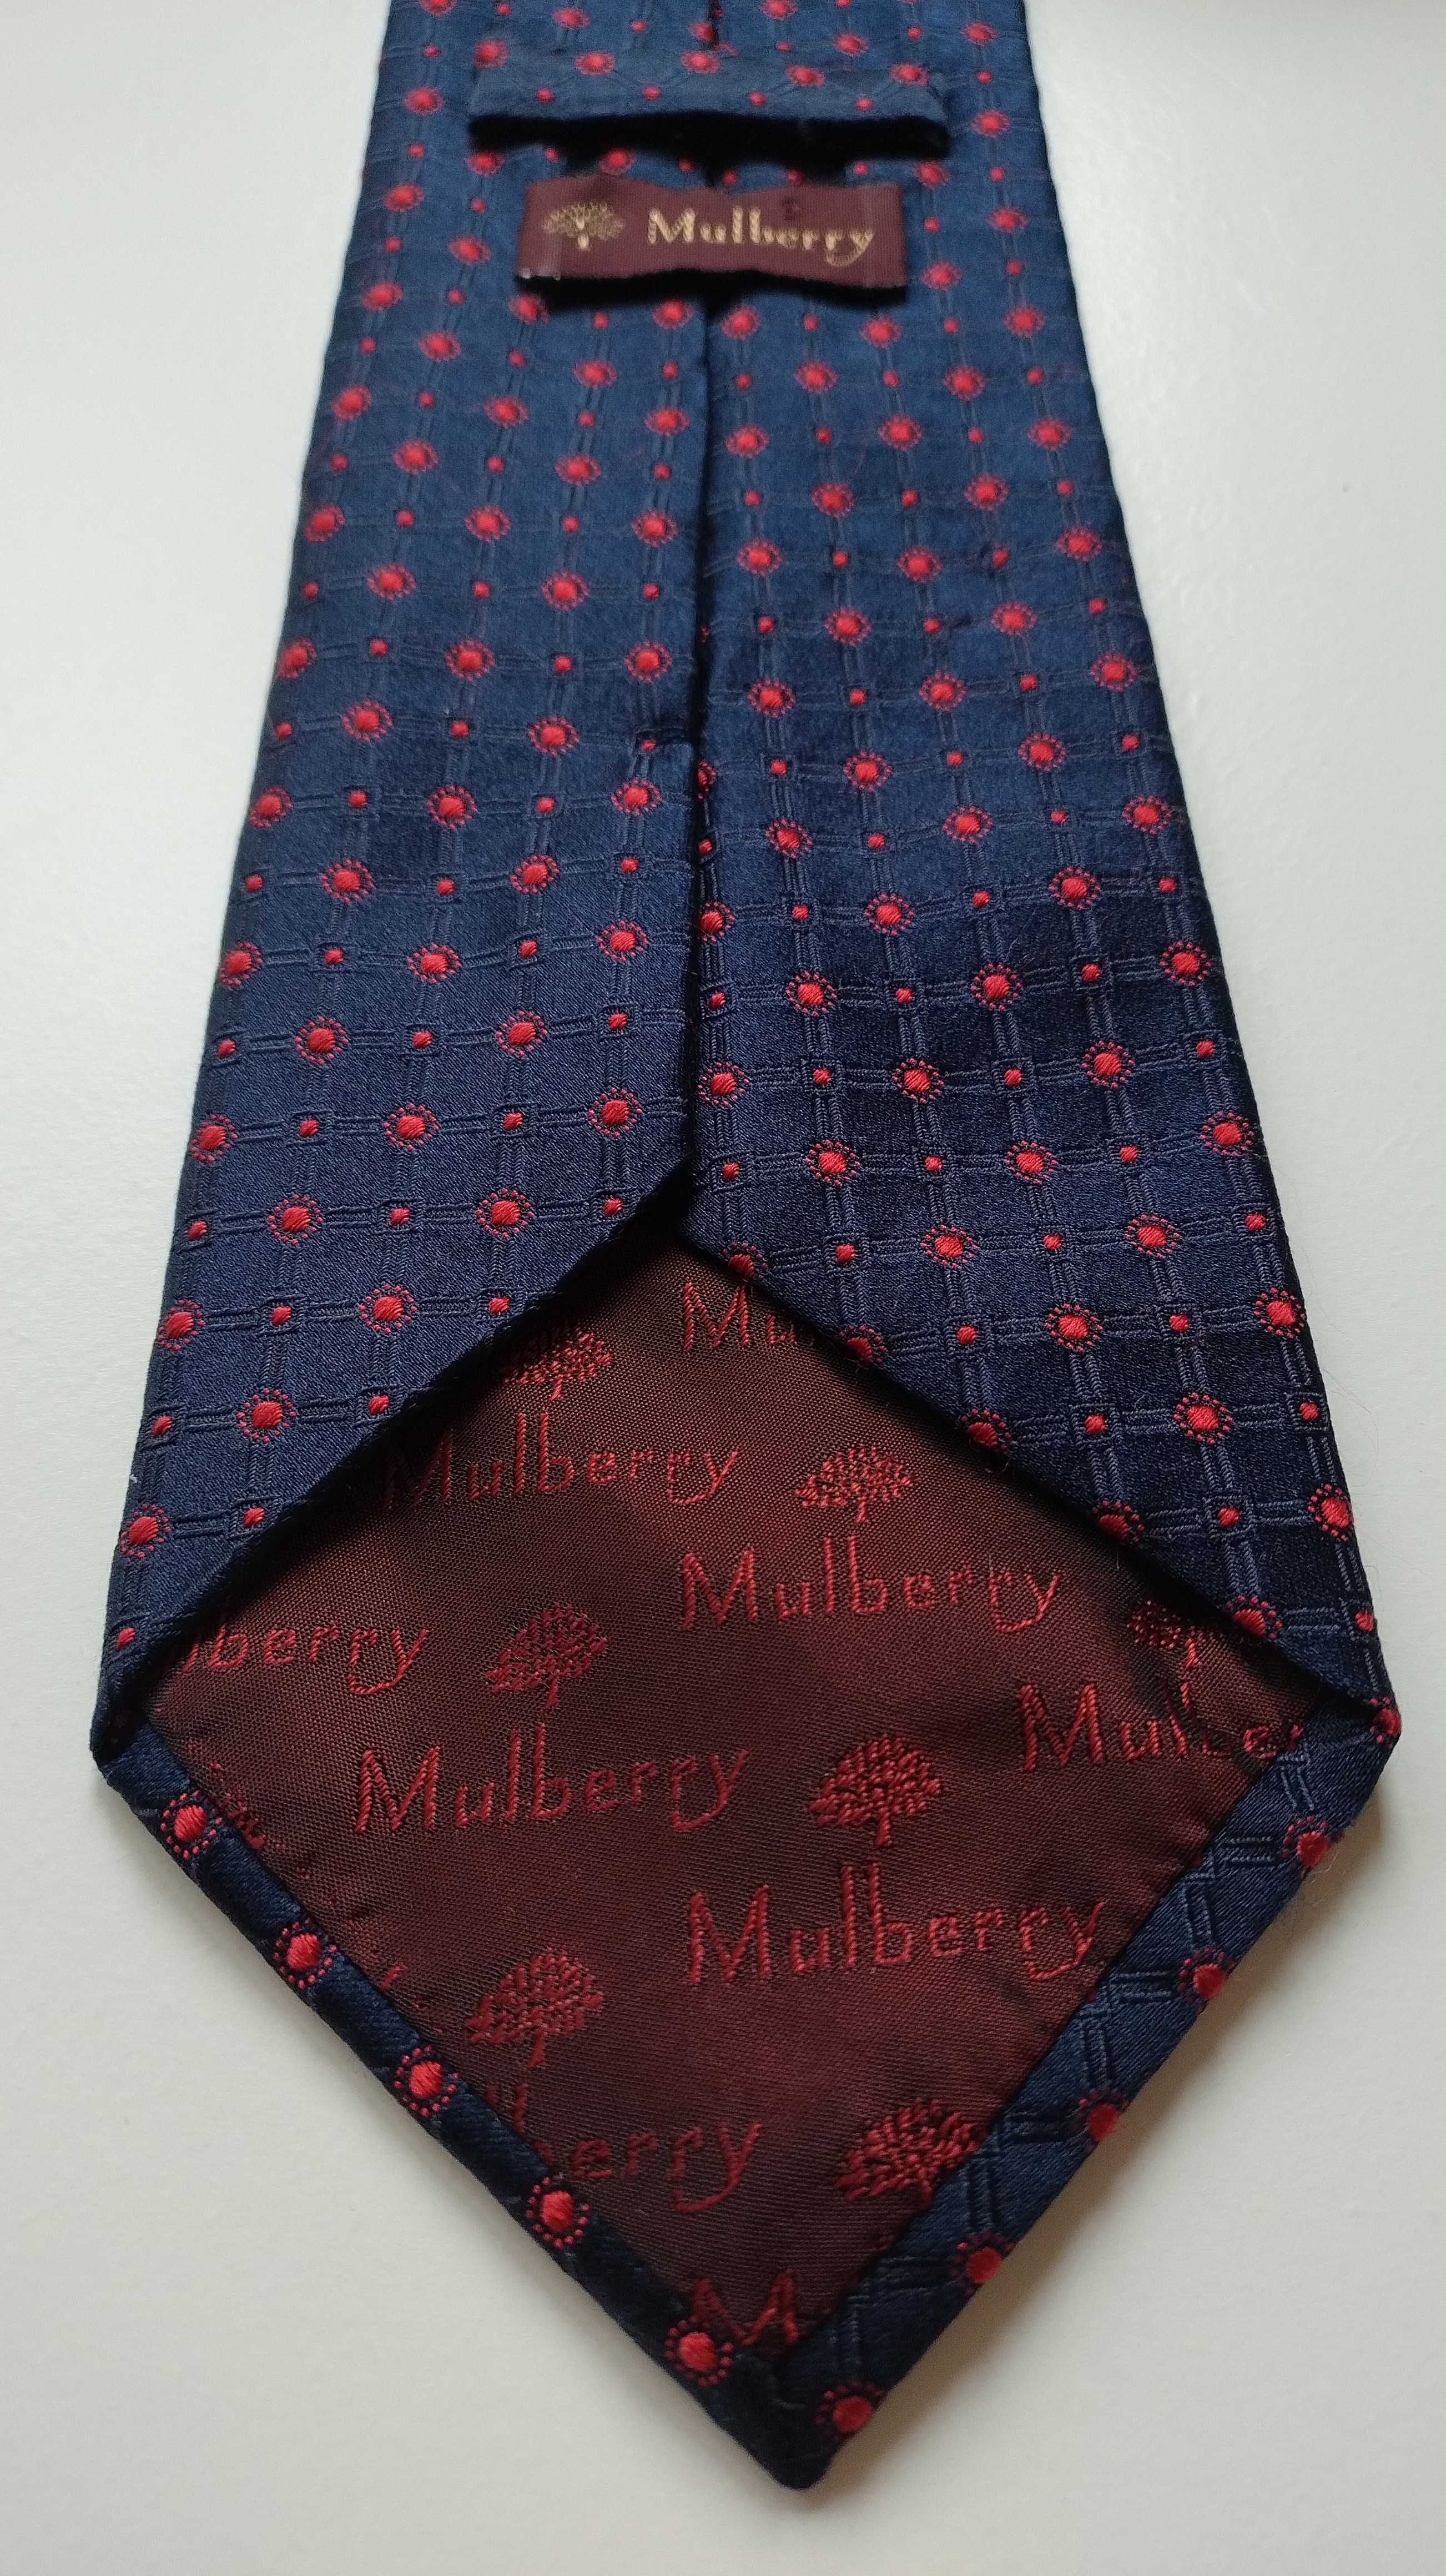 Krawat Mulberry 100% silk jedwab Made in Italy oryginał jedwab vintage